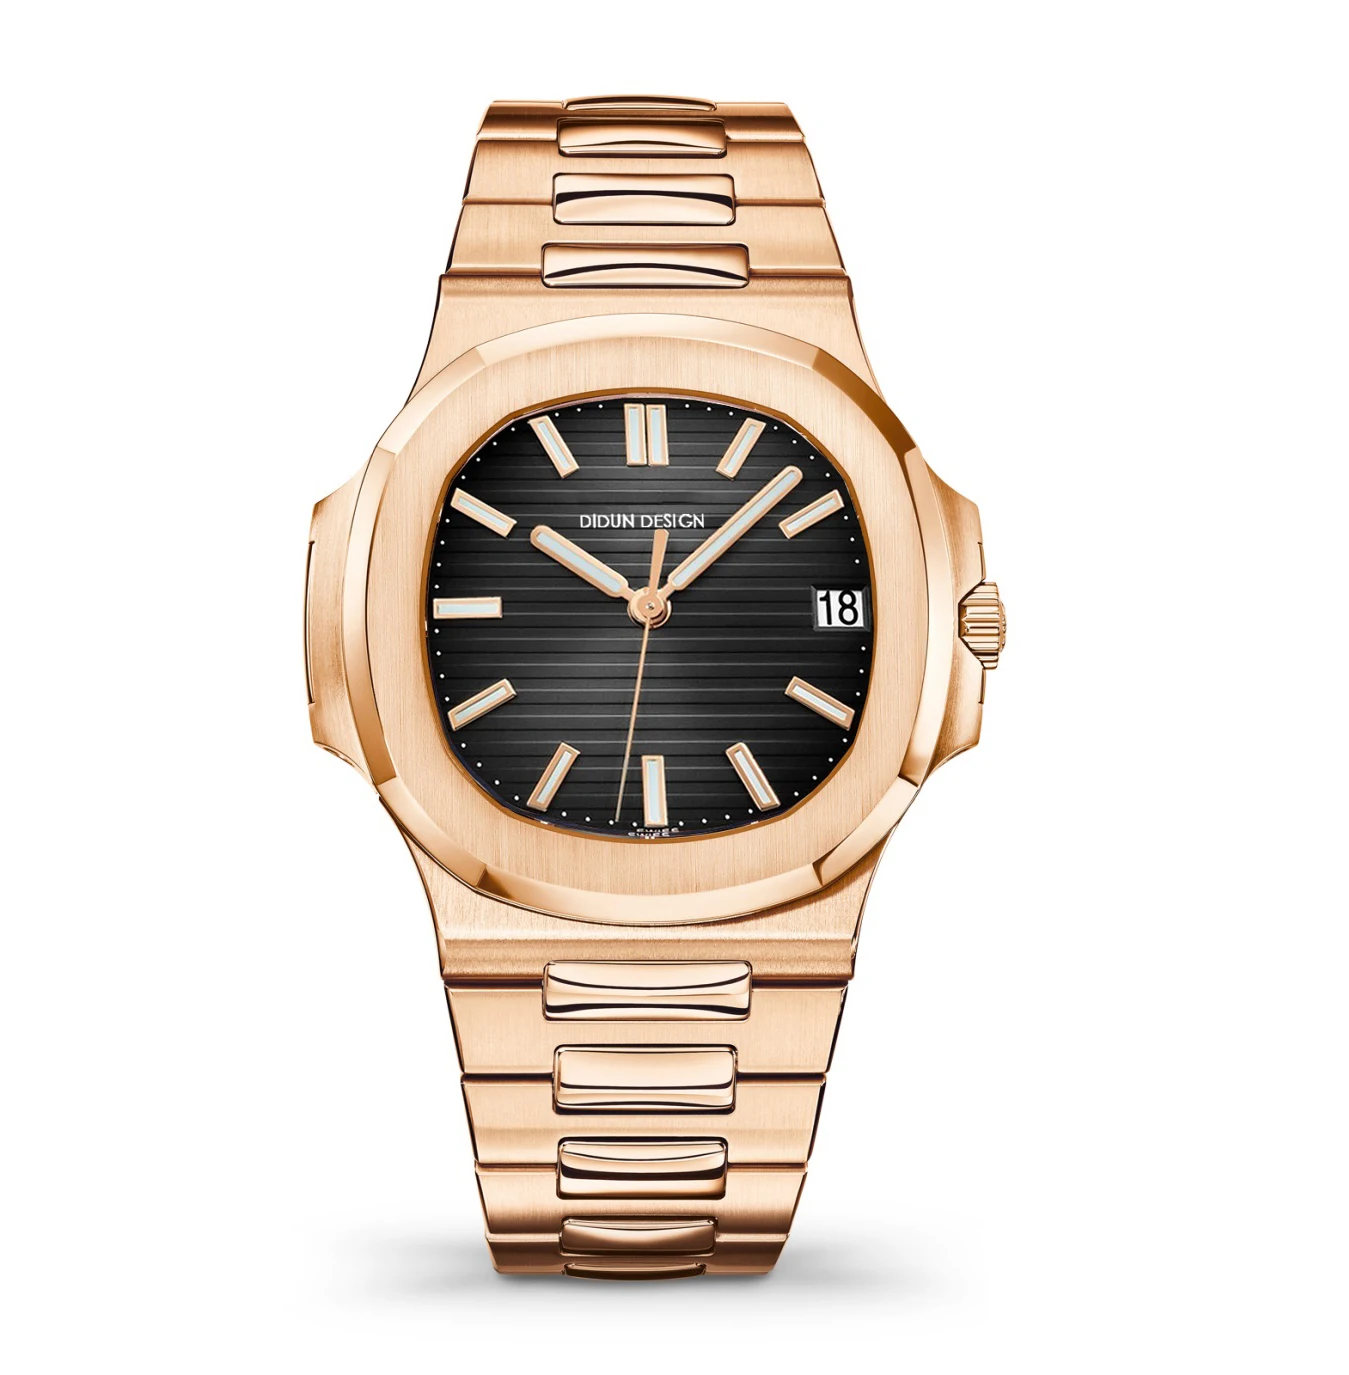 

Didun New Watch Men Luxury Brand The Nautilus Automatic Watch Fashion Business Male Mechanical Clock Stainless Steel Waterproof